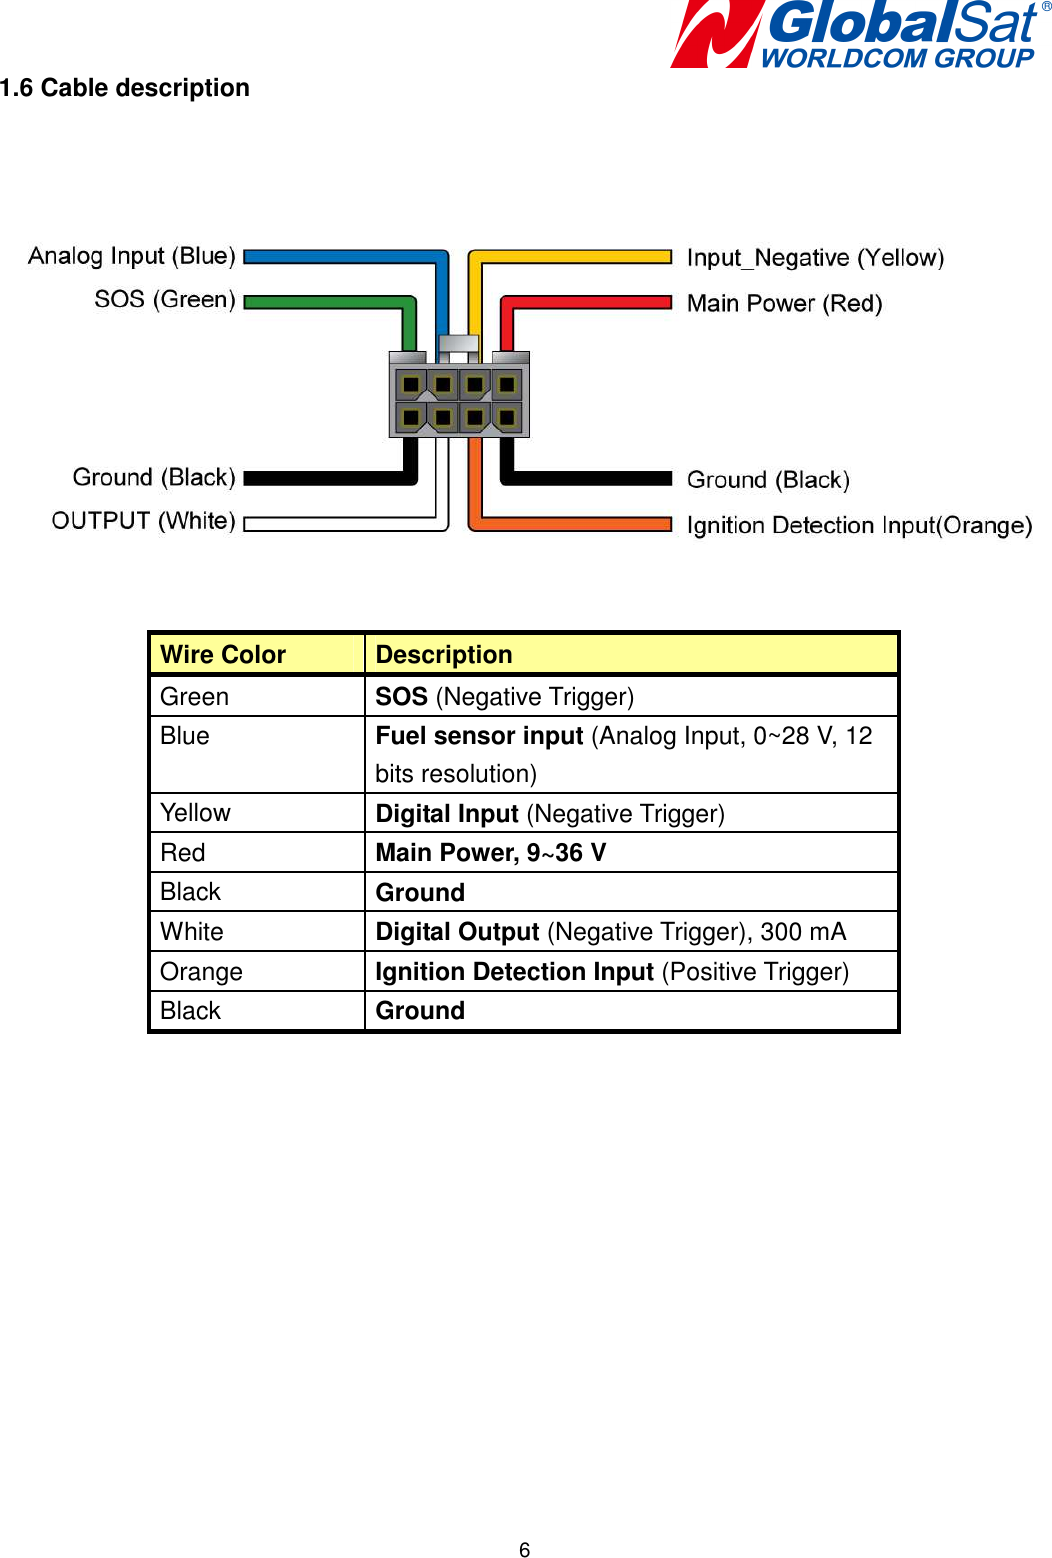   6 1.6 Cable description   Wire Color  Description Green  SOS (Negative Trigger) Blue  Fuel sensor input (Analog Input, 0~28 V, 12 bits resolution) Yellow  Digital Input (Negative Trigger) Red  Main Power, 9~36 V Black  Ground White  Digital Output (Negative Trigger), 300 mA Orange  Ignition Detection Input (Positive Trigger) Black  Ground            